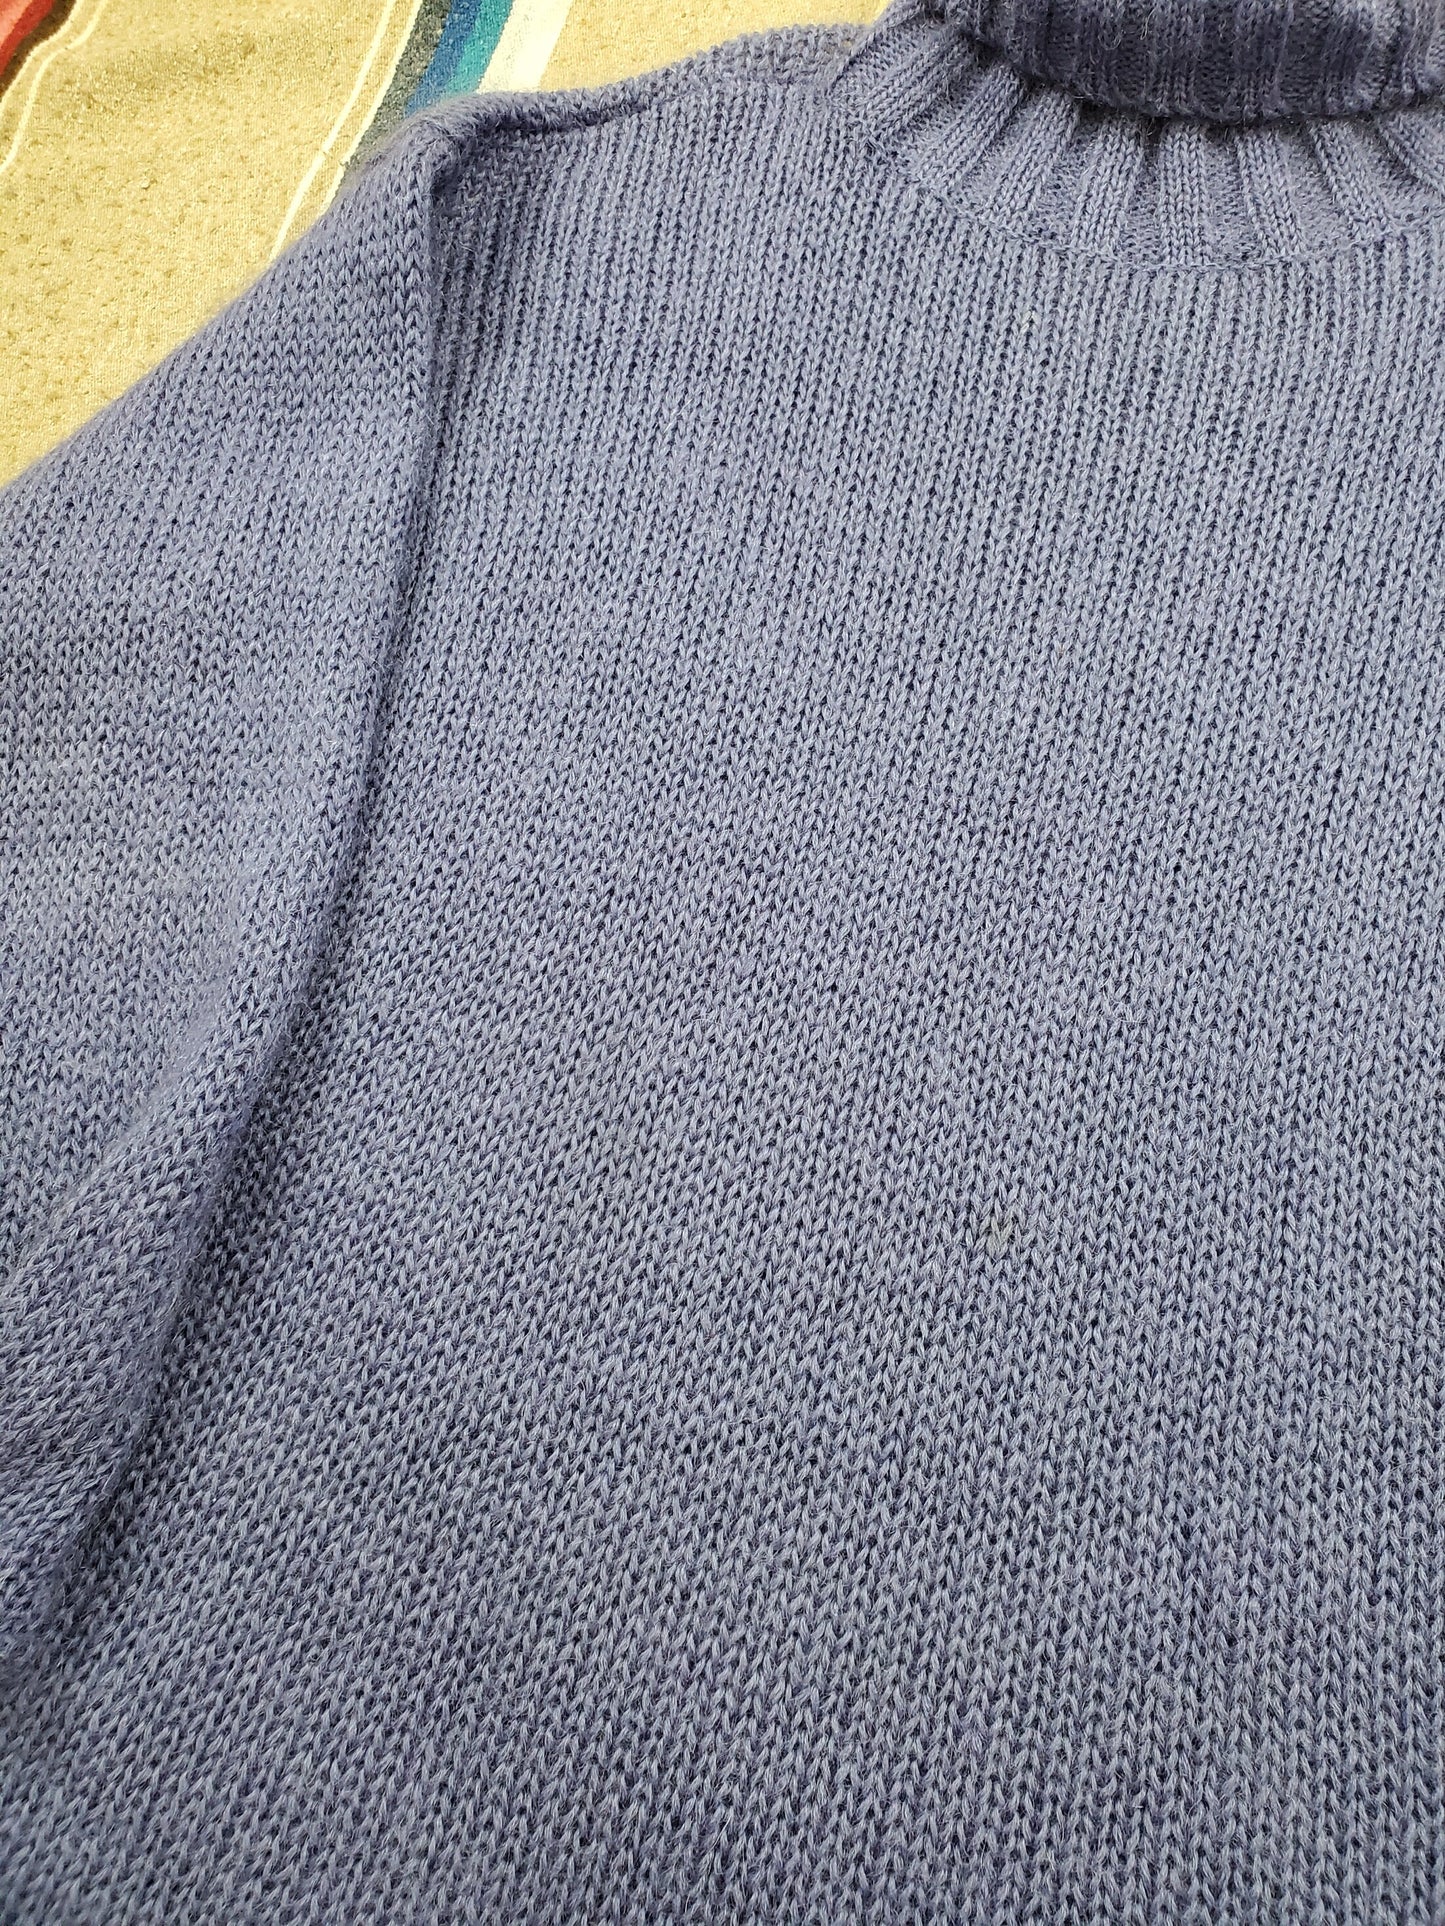 1980s/1990s Esprit Essentials Knit Turtleneck Sweater Size L/XL